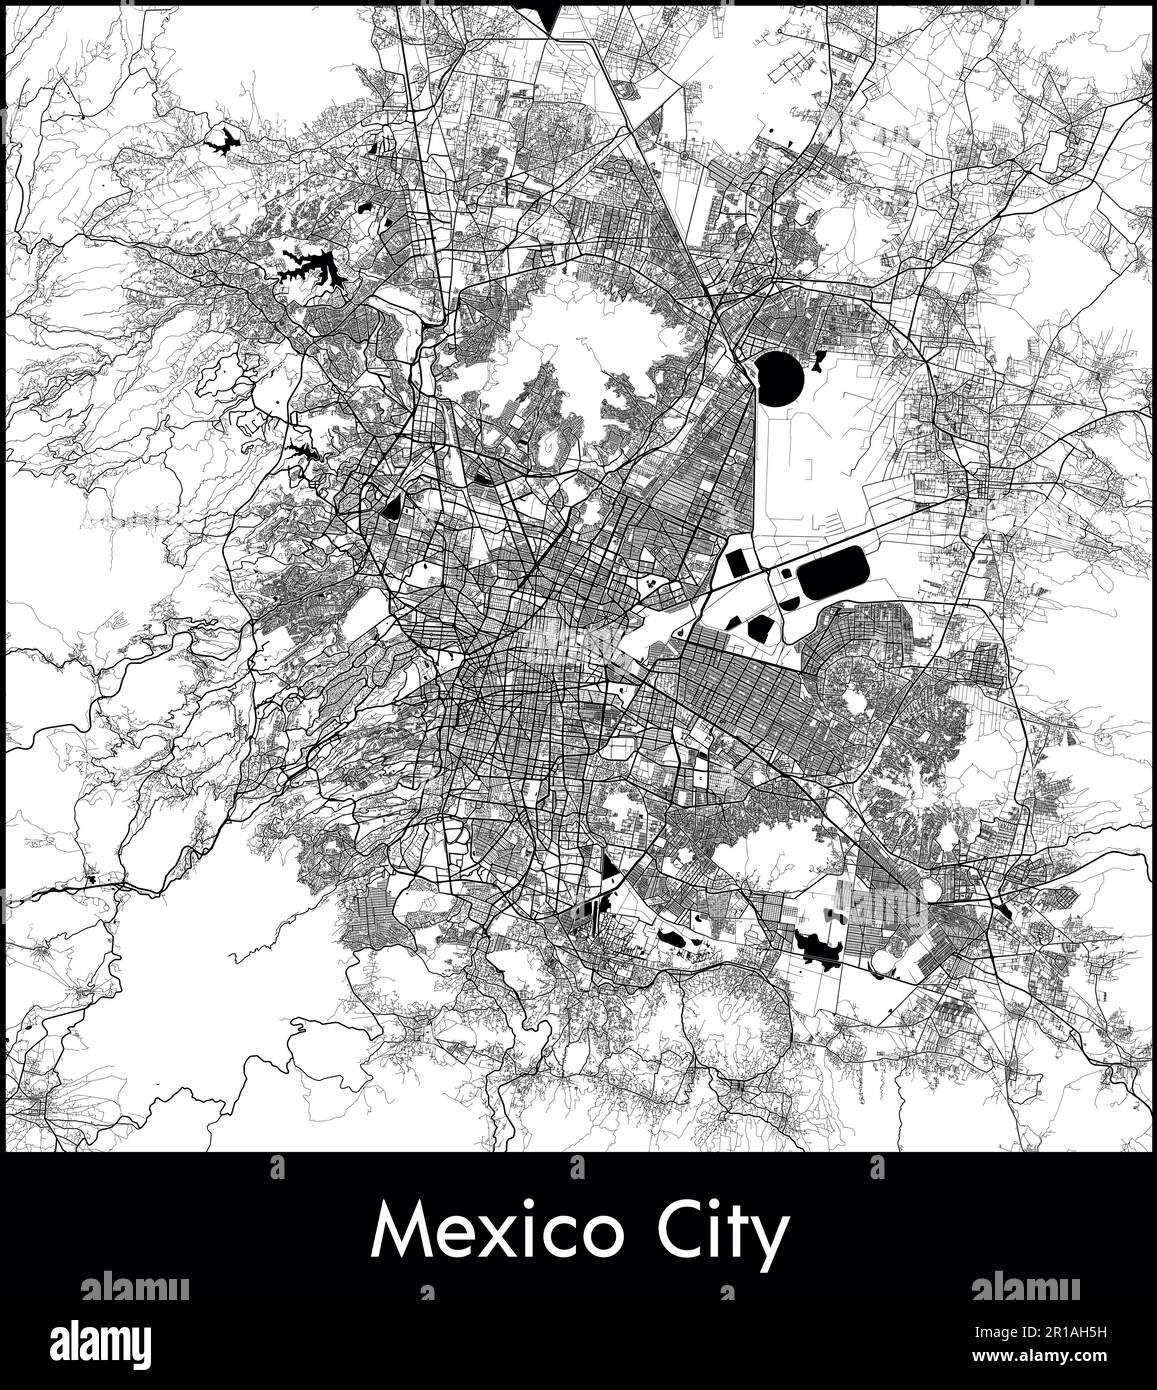 City Map North America Mexico Mexico City vector illustration Stock ...